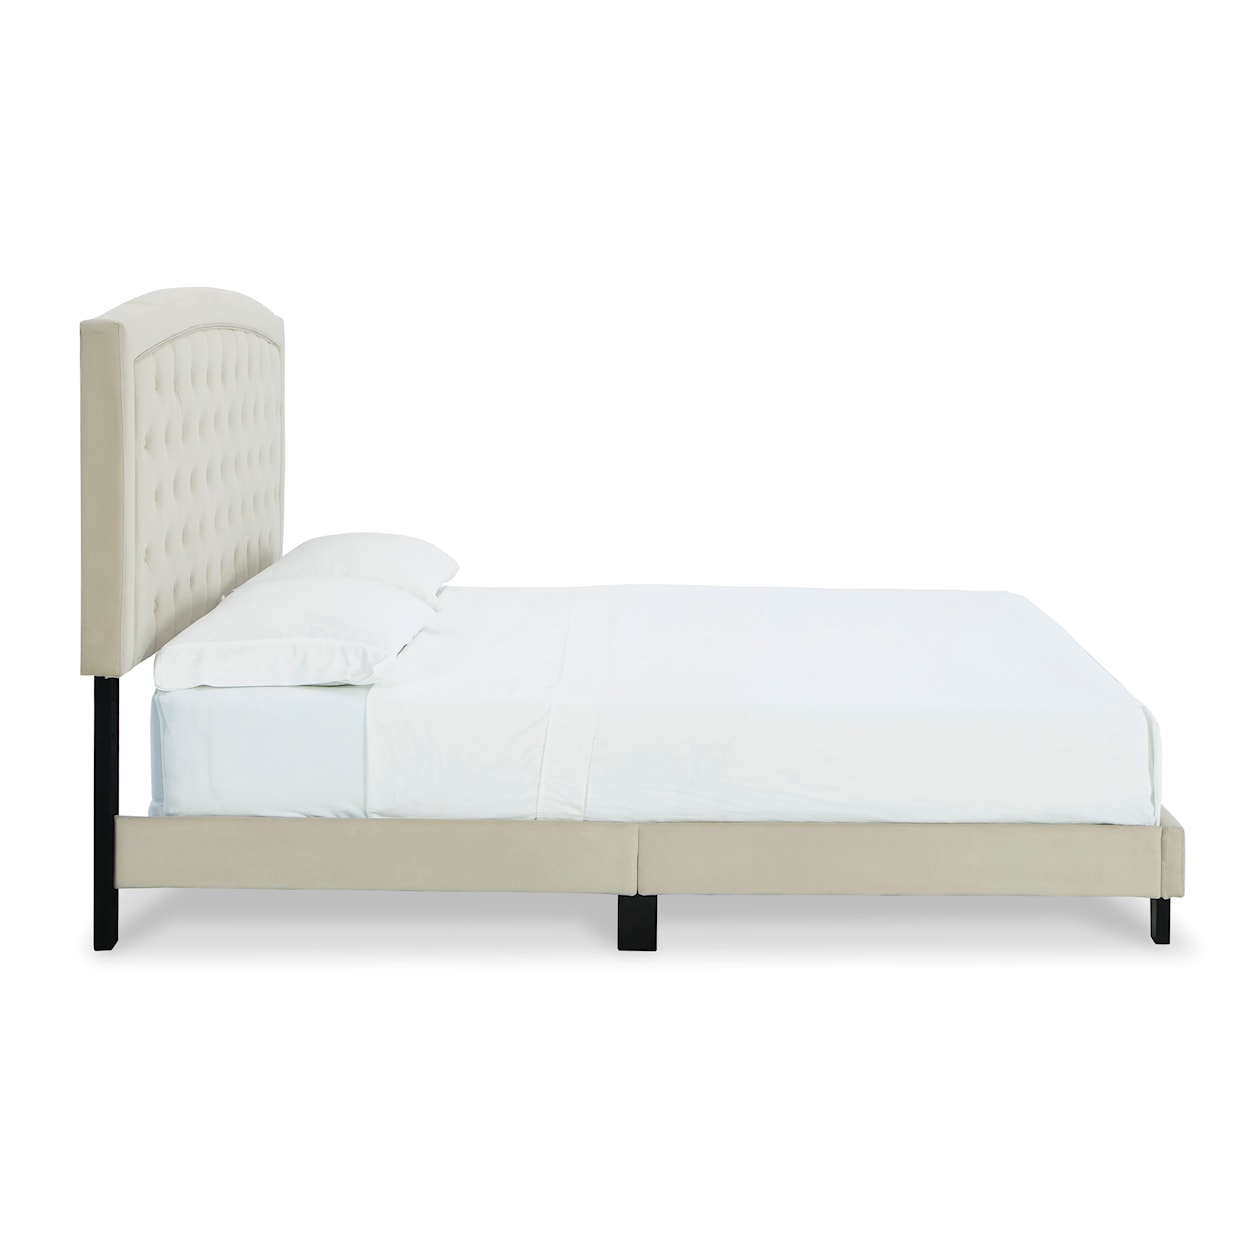 Ashley Furniture Signature Design Adelloni King Upholstered Bed